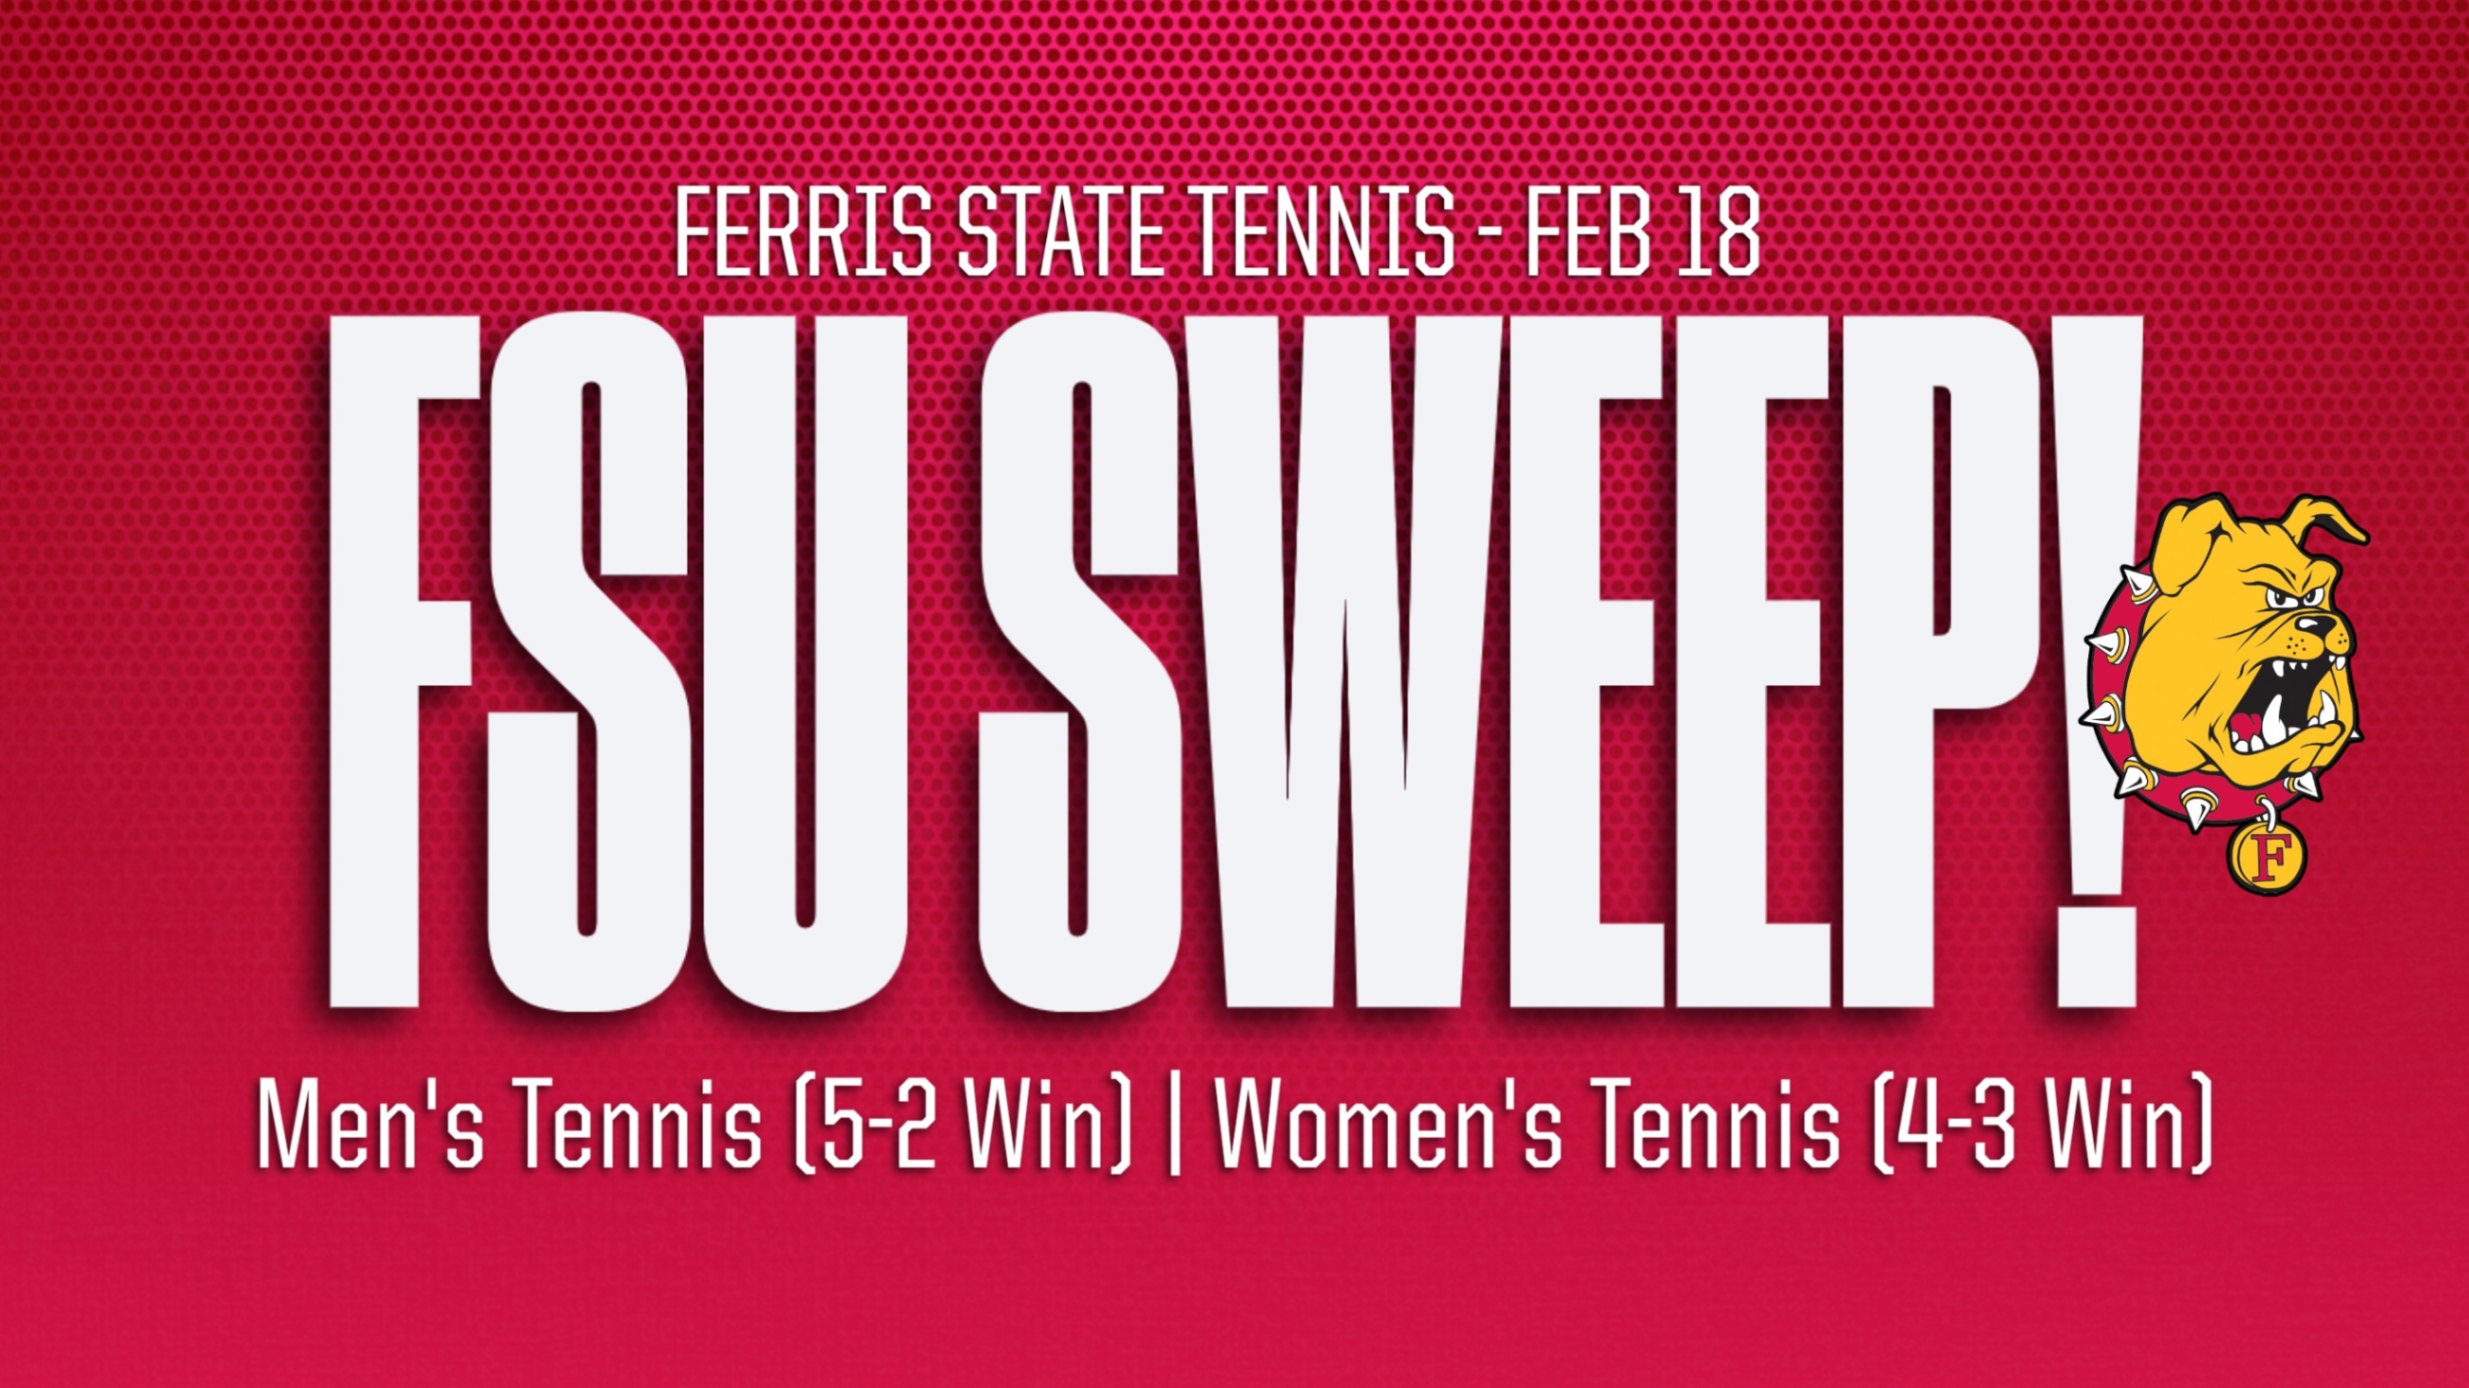 Ferris State Tennis Teams Garner Sweep Over Walsh In Regional Action At Home